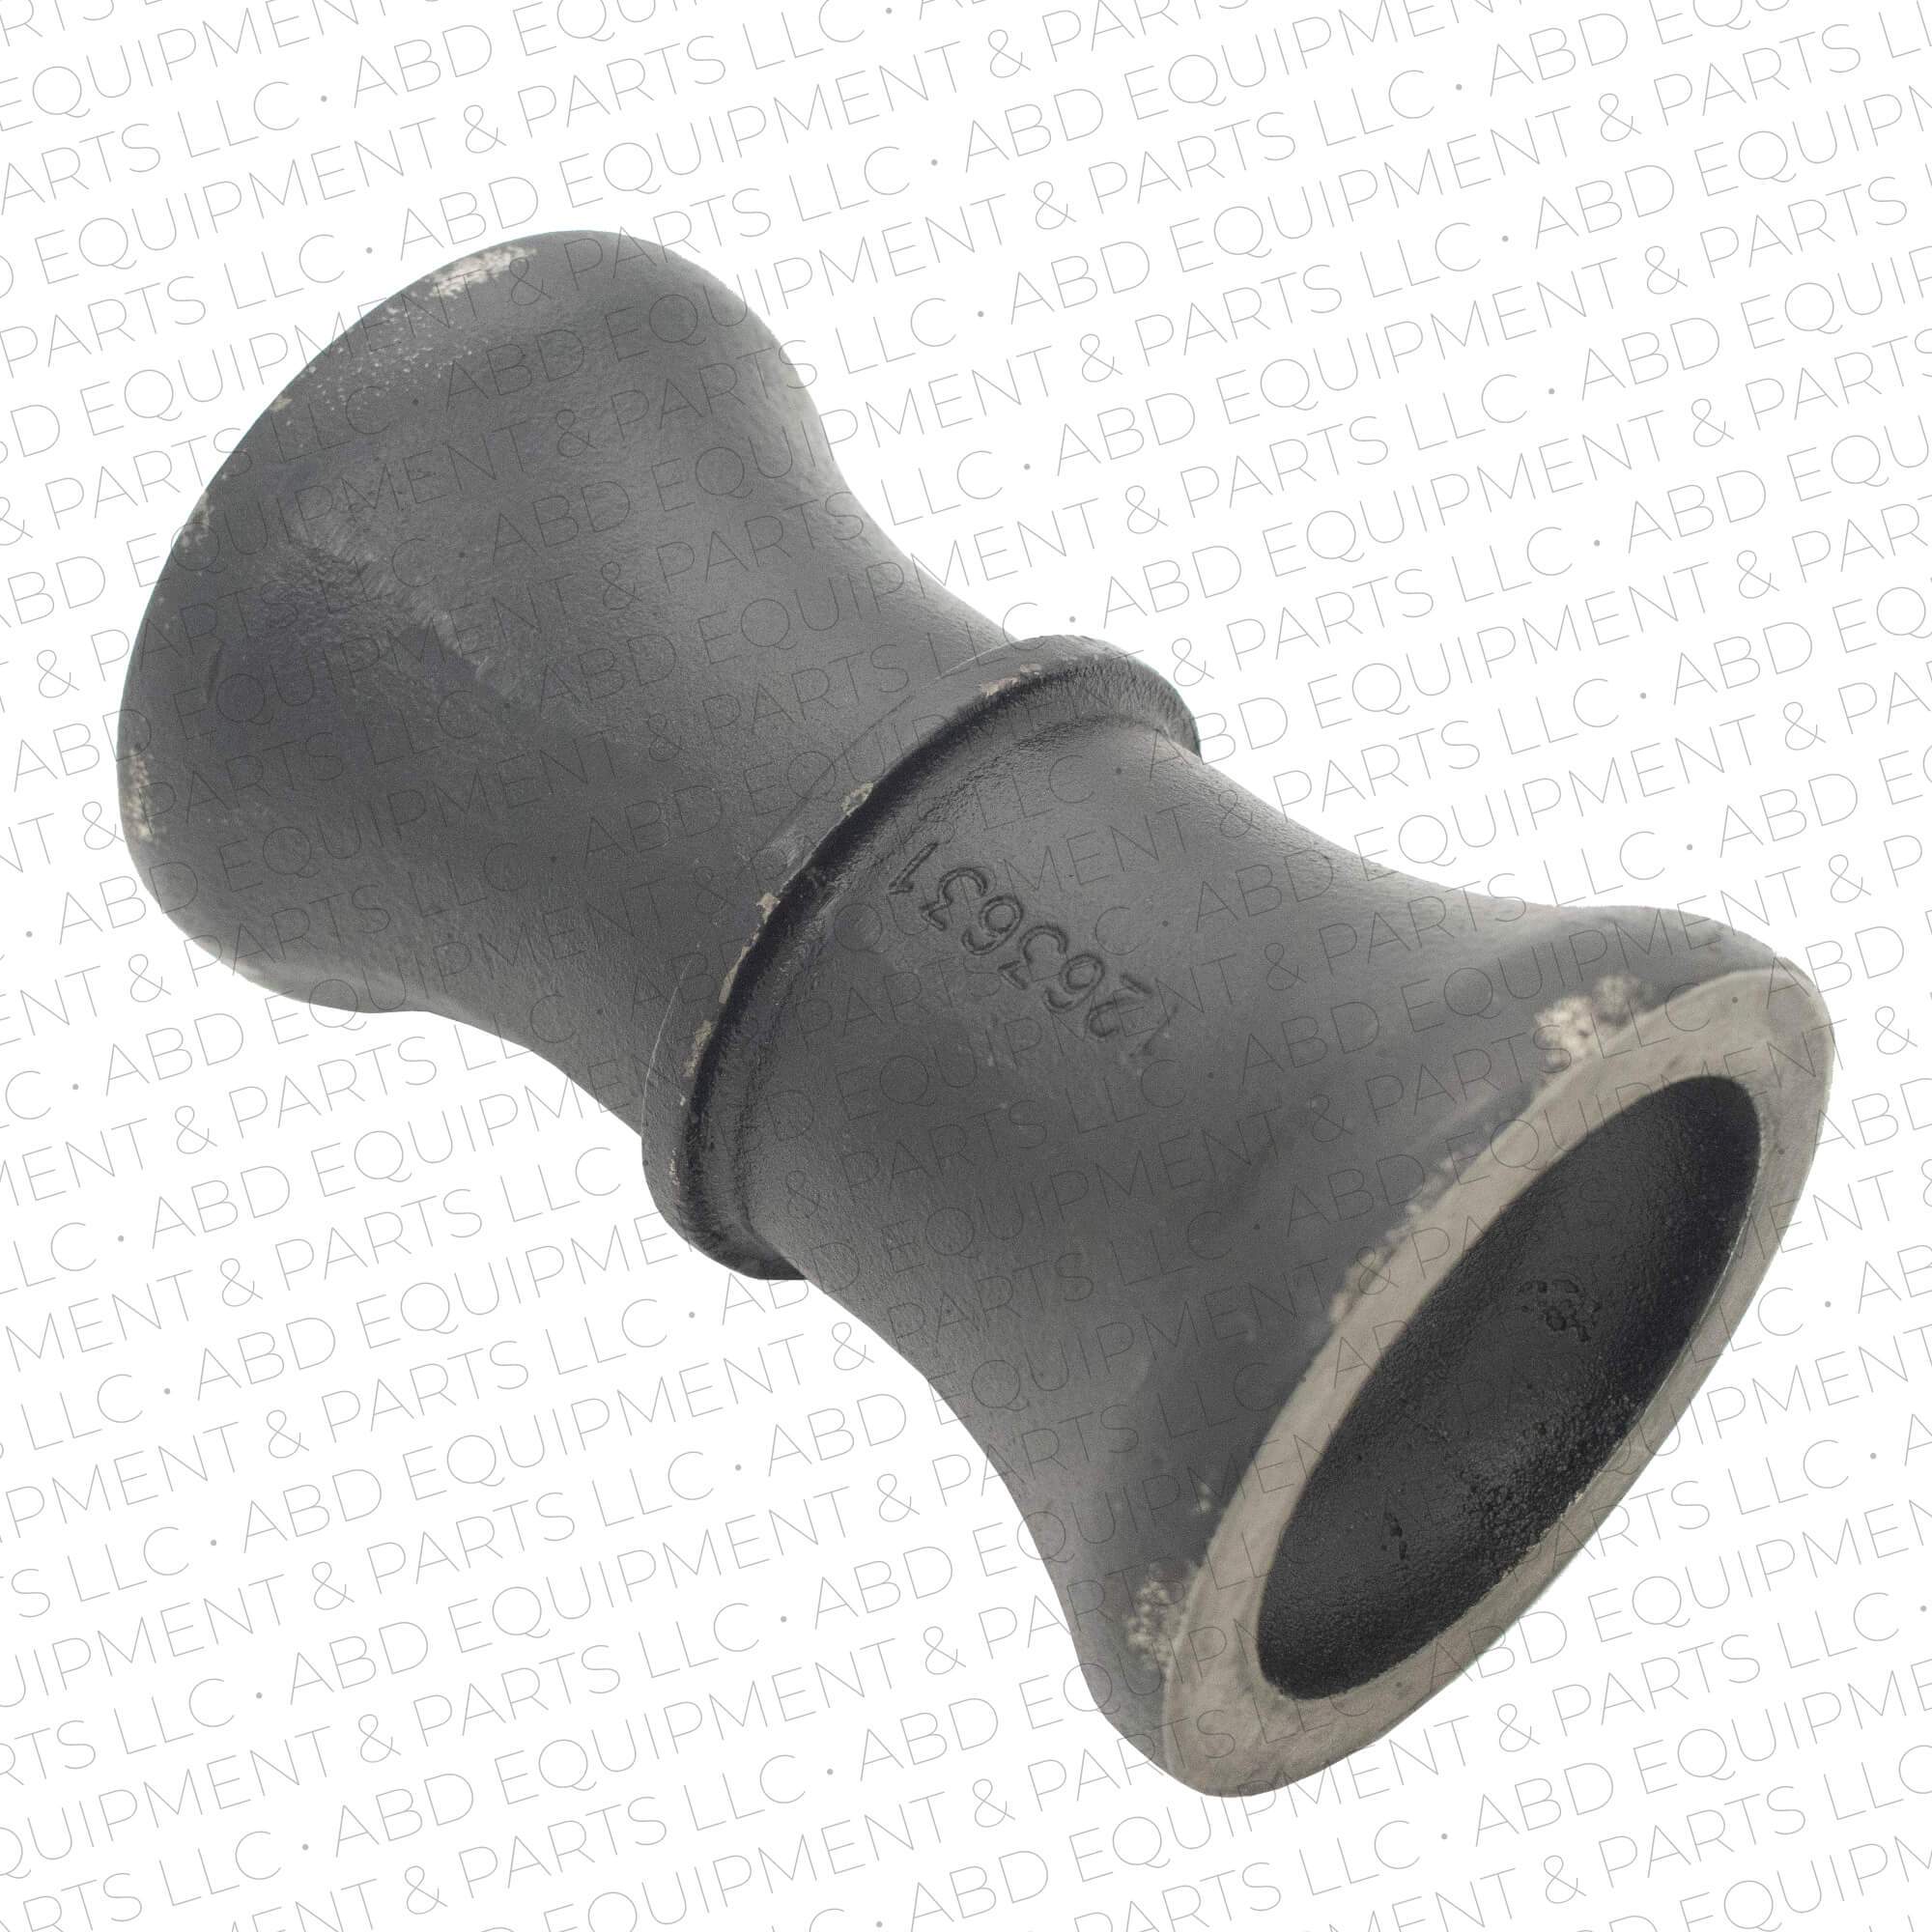 Disc Harrow 7.5 inch Long Full Spool 1.5 inch (1 1/2 inch) Round Axle - Abd Equipment & Parts LLC